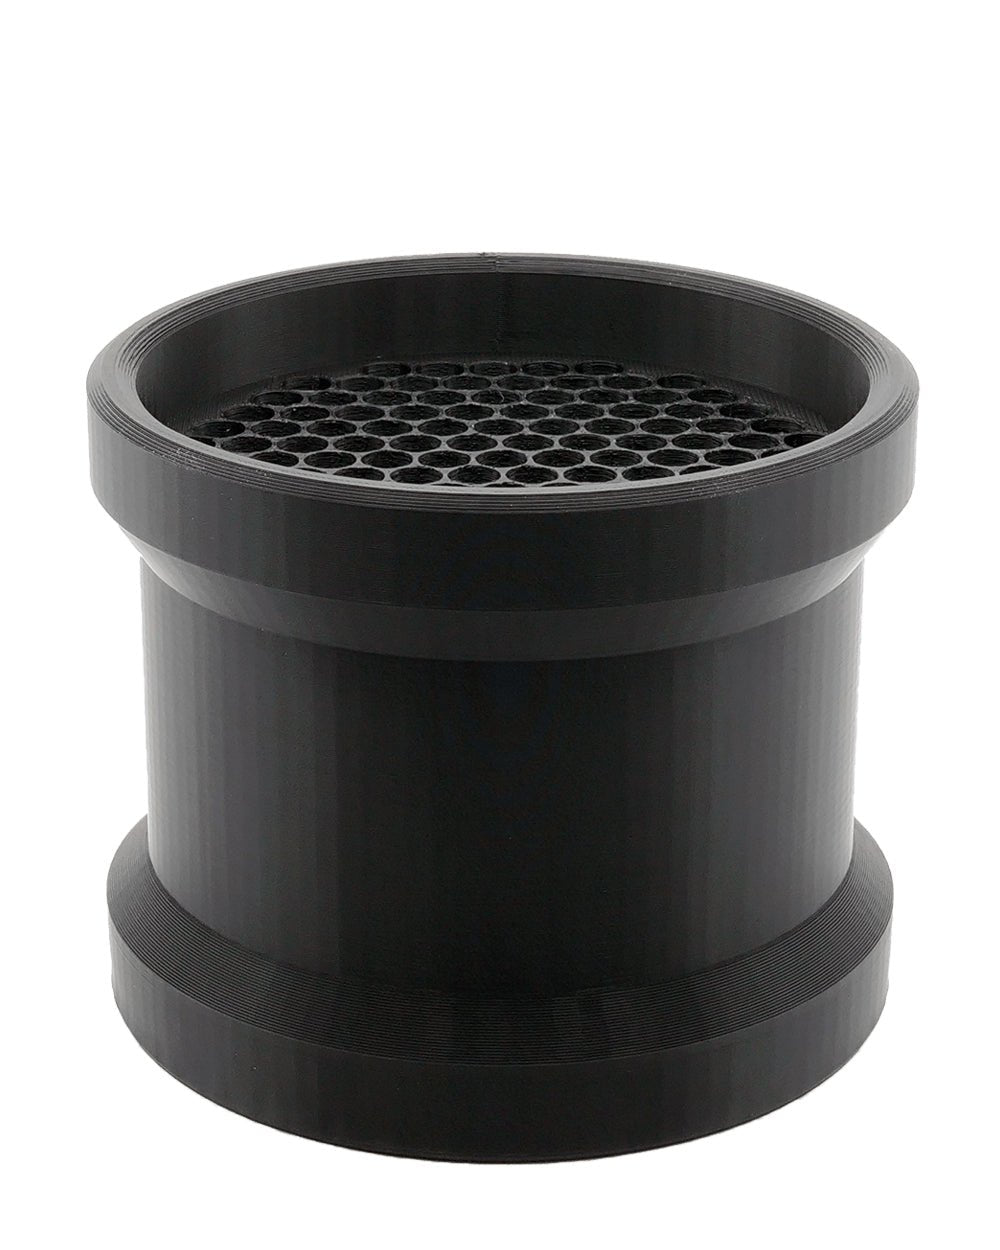 HUMBOLDT | Black Pre-Rolled Cones Filling Machine Cartridge 98mm Slim | Fill 121 Cones Per Run - 1